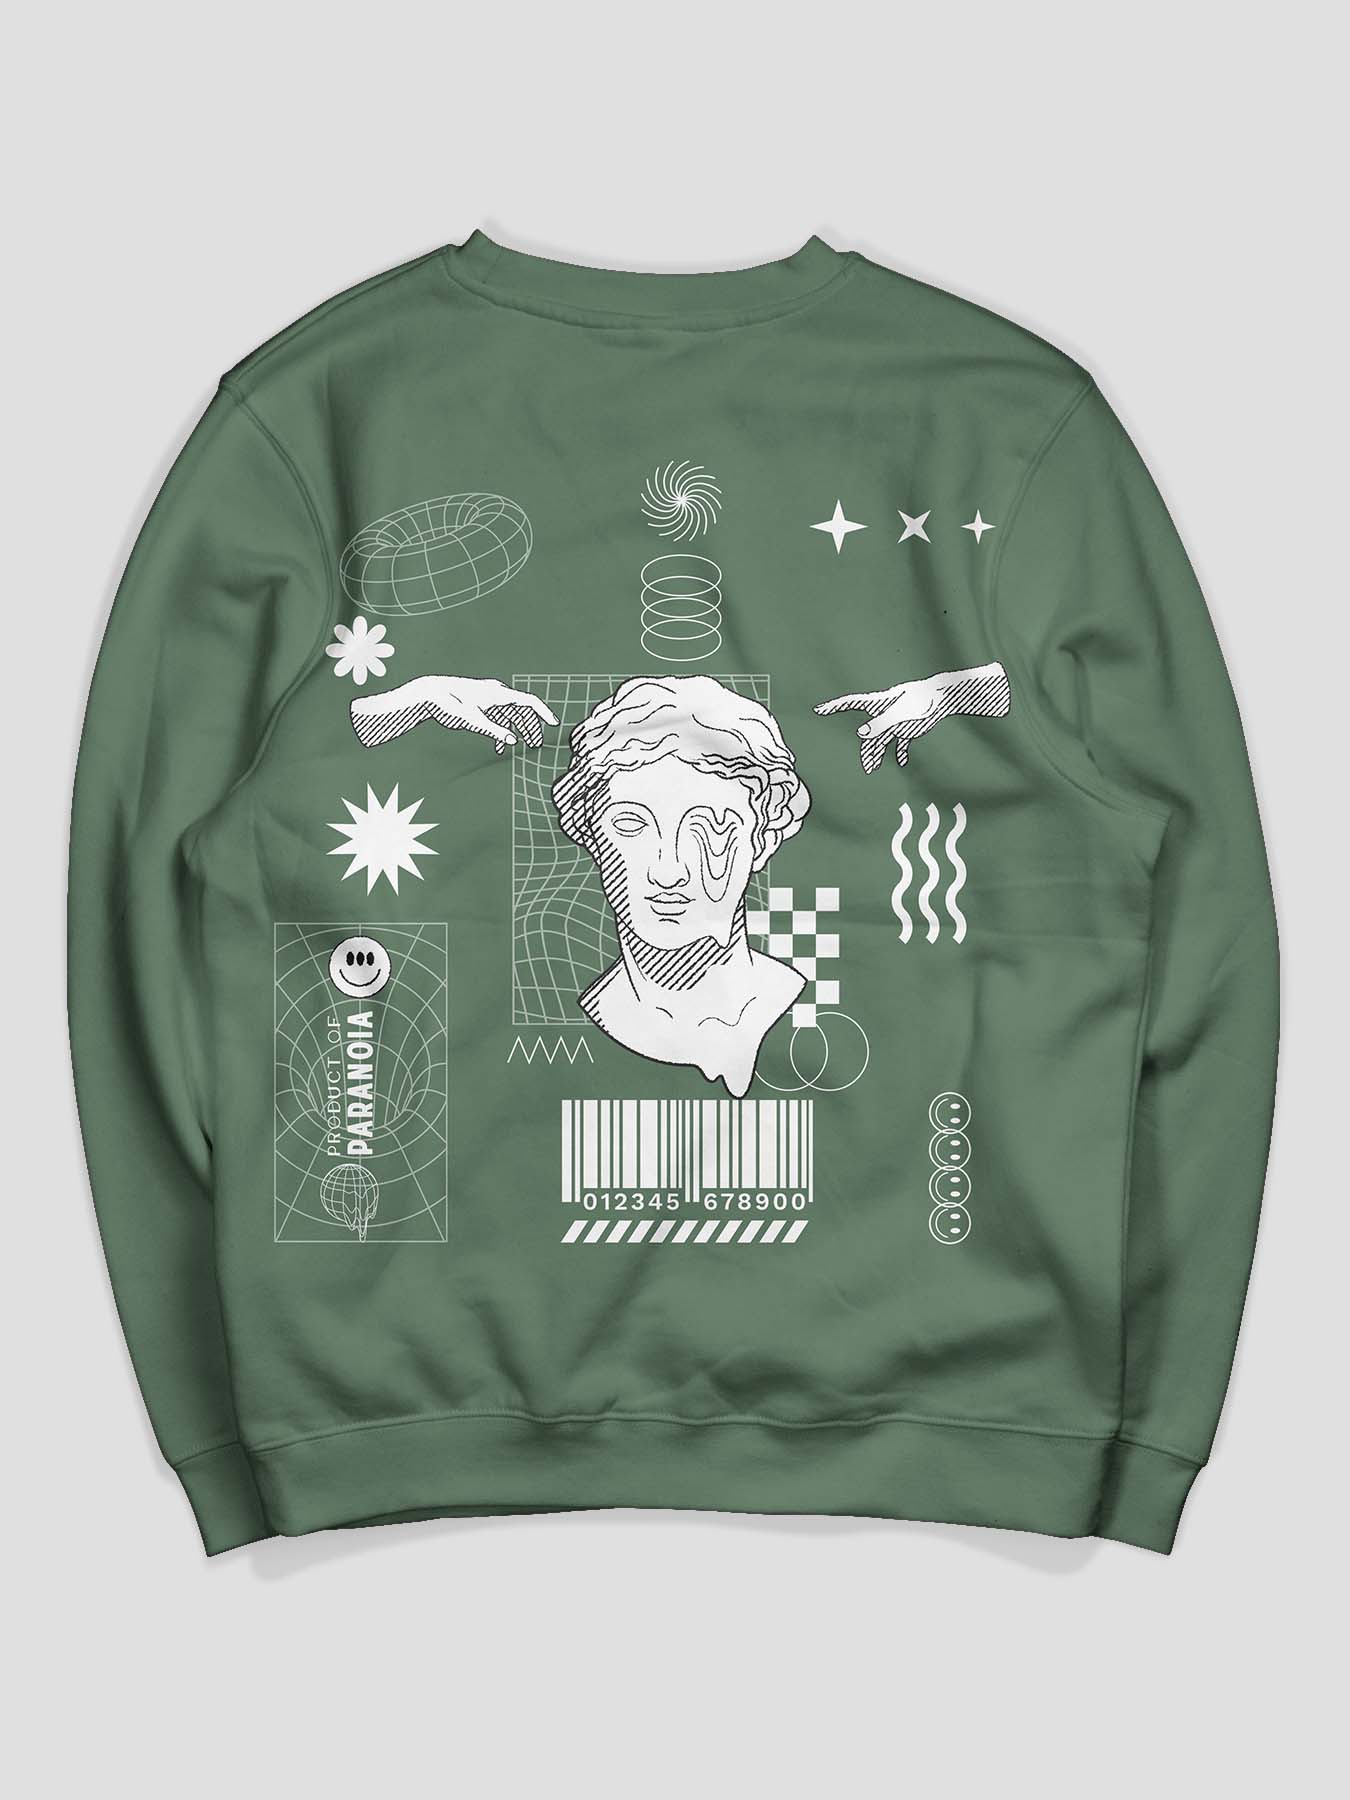 Product of Paranoia Printed Sweatshirt - keos.life